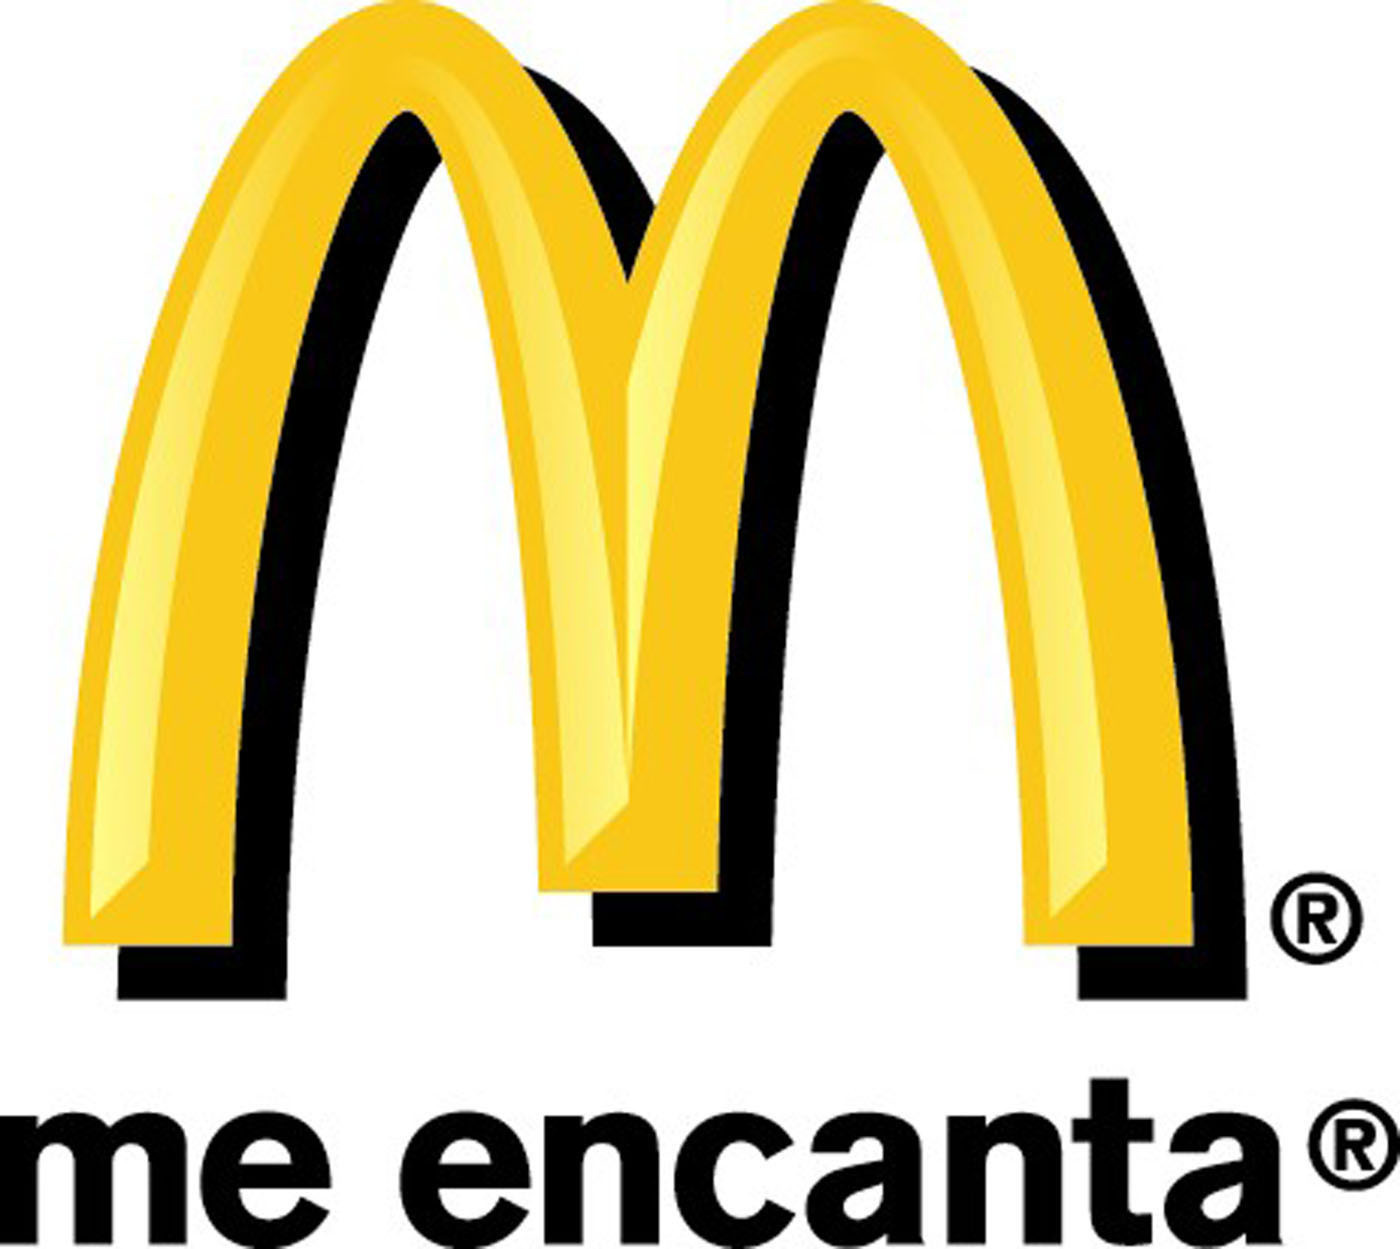 free clipart mcdonalds logo - photo #8